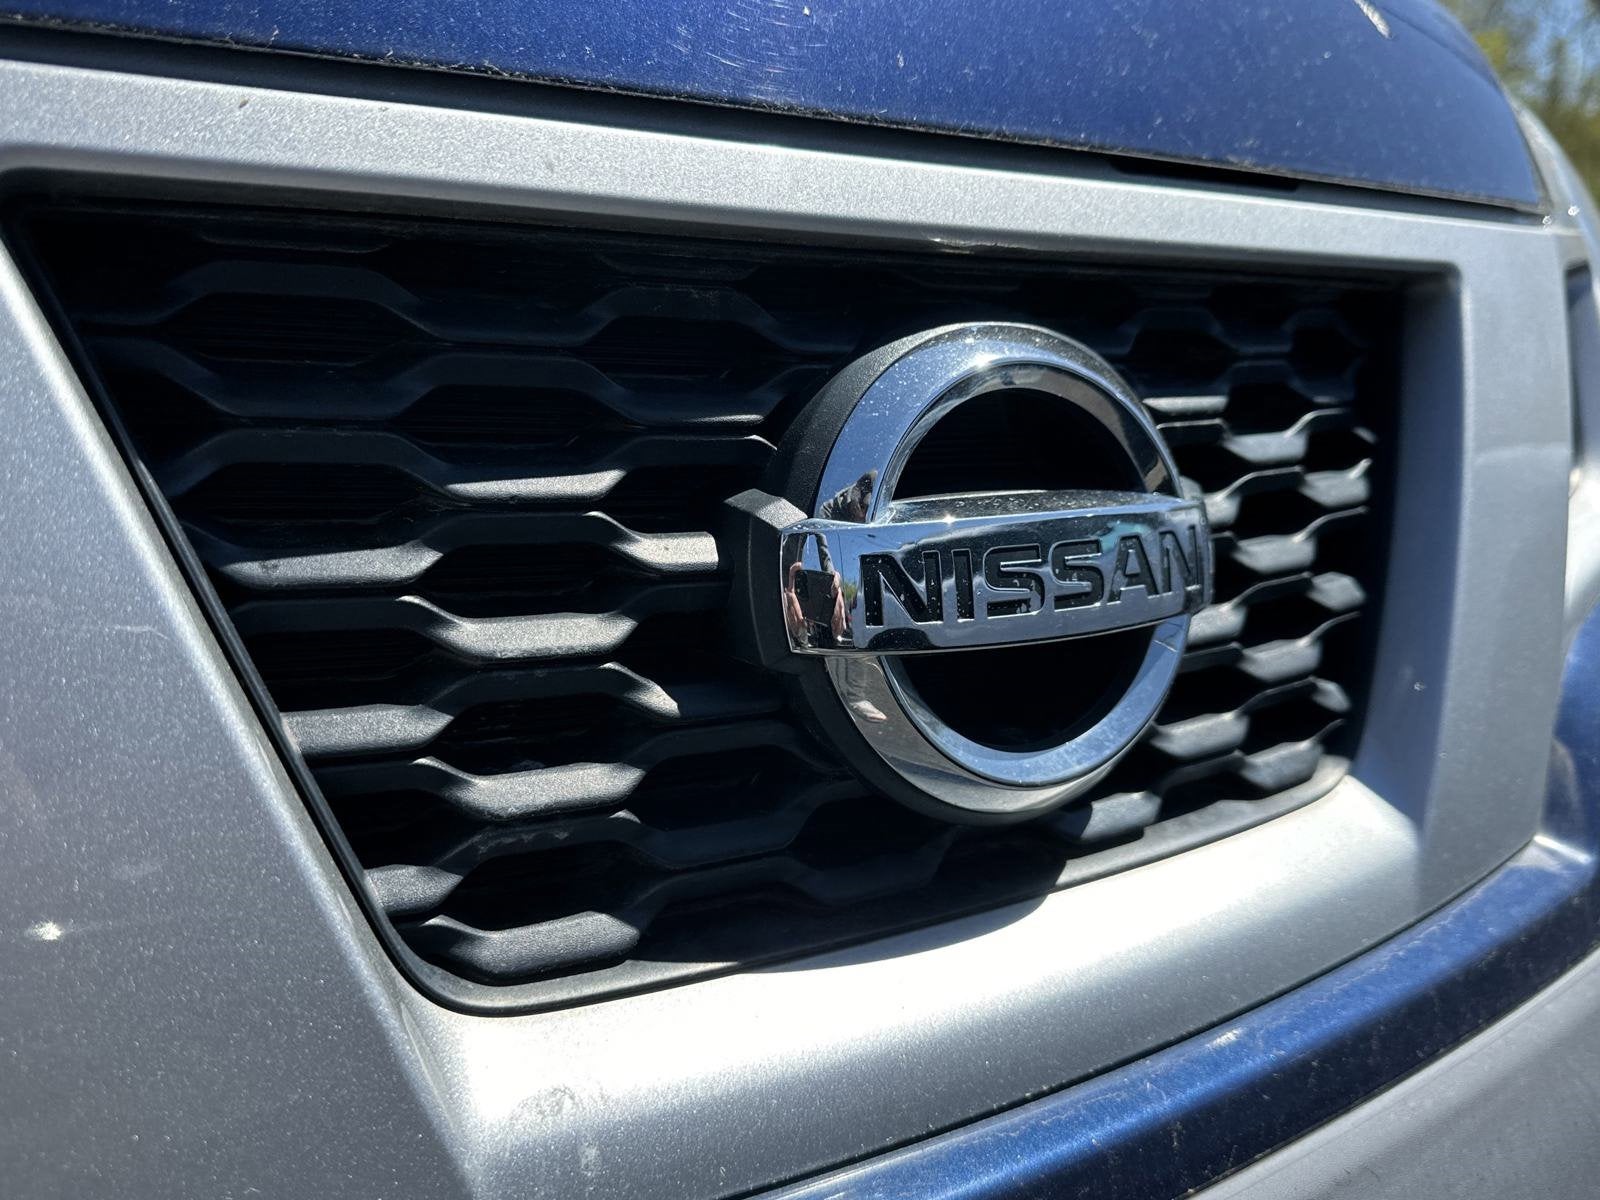 2014 Nissan NV200 SV